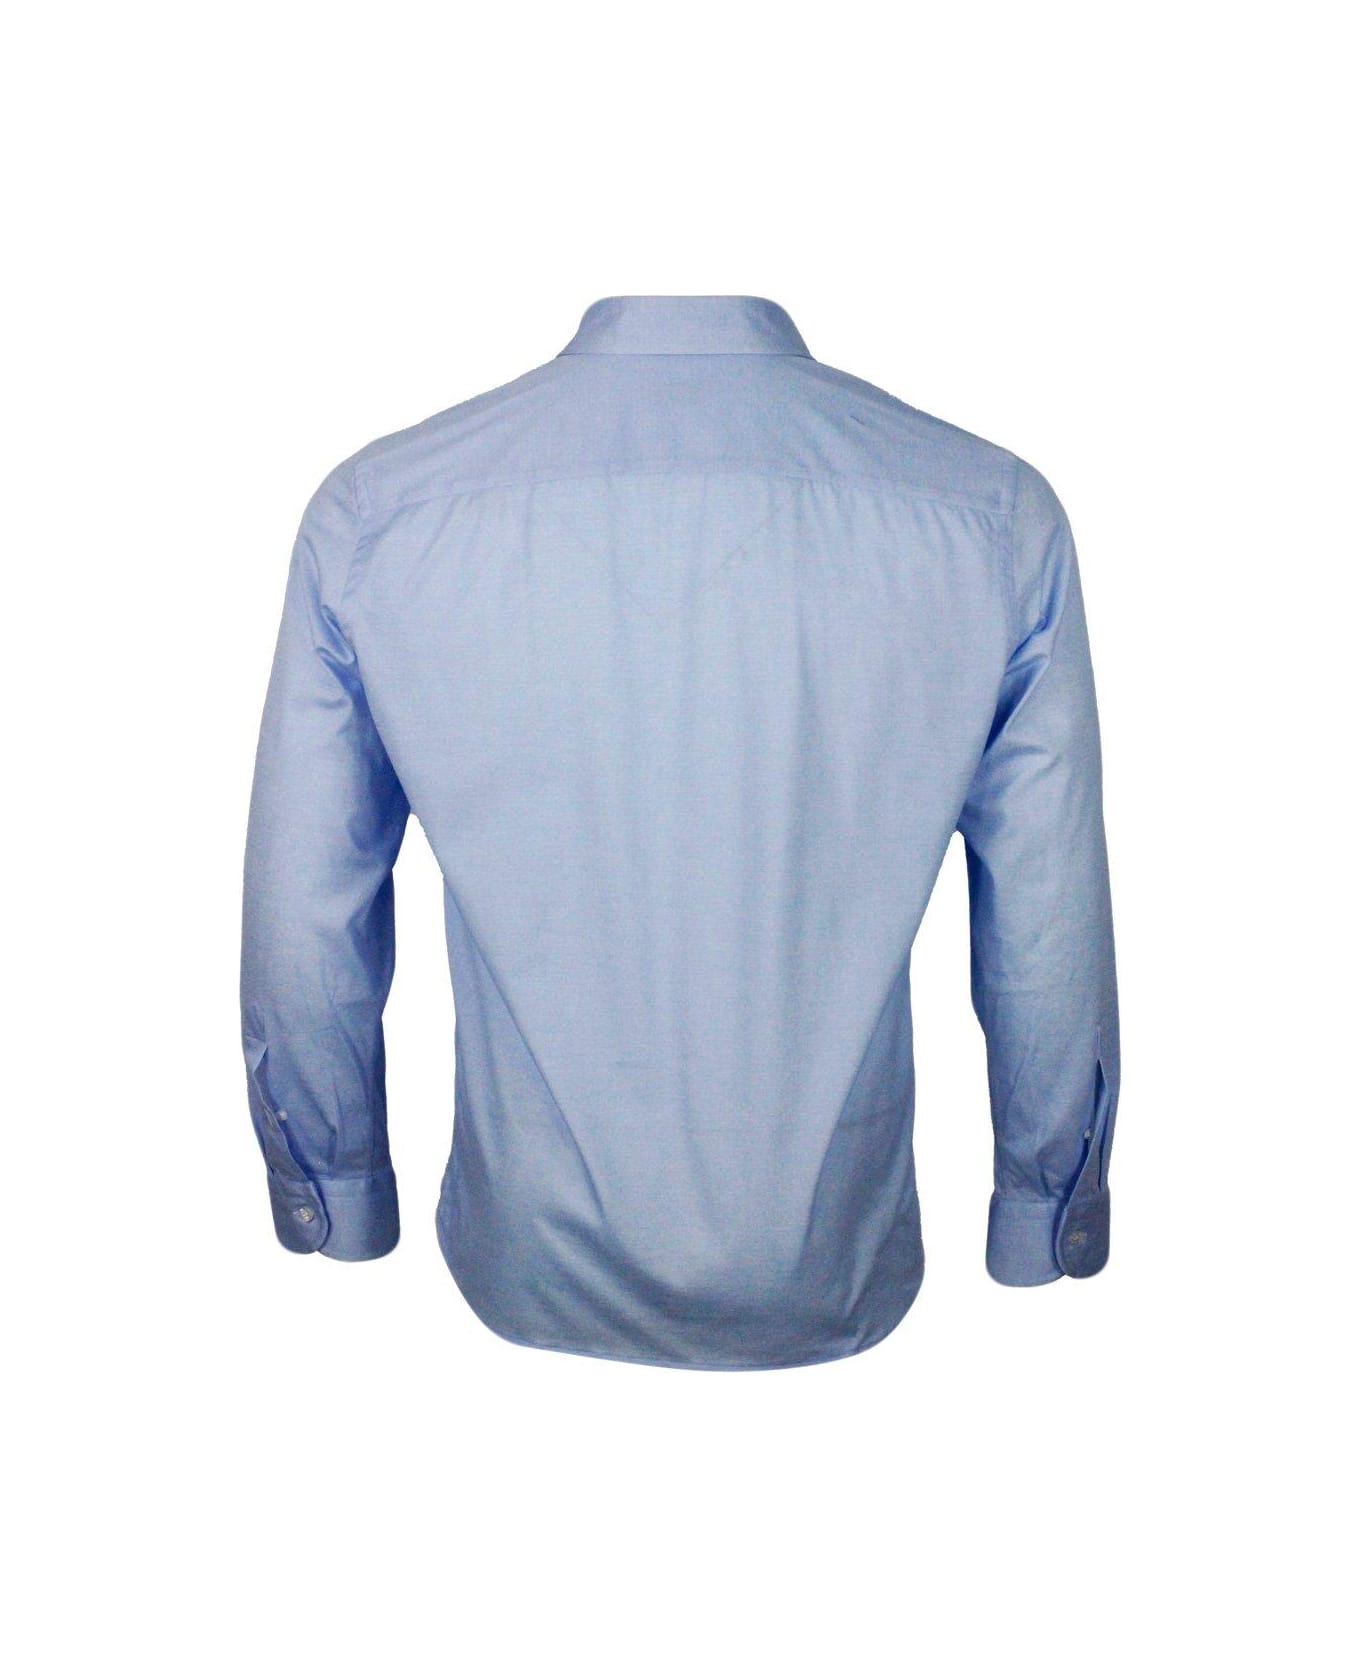 Sonrisa Long-sleeved Button-up Shirt シャツ